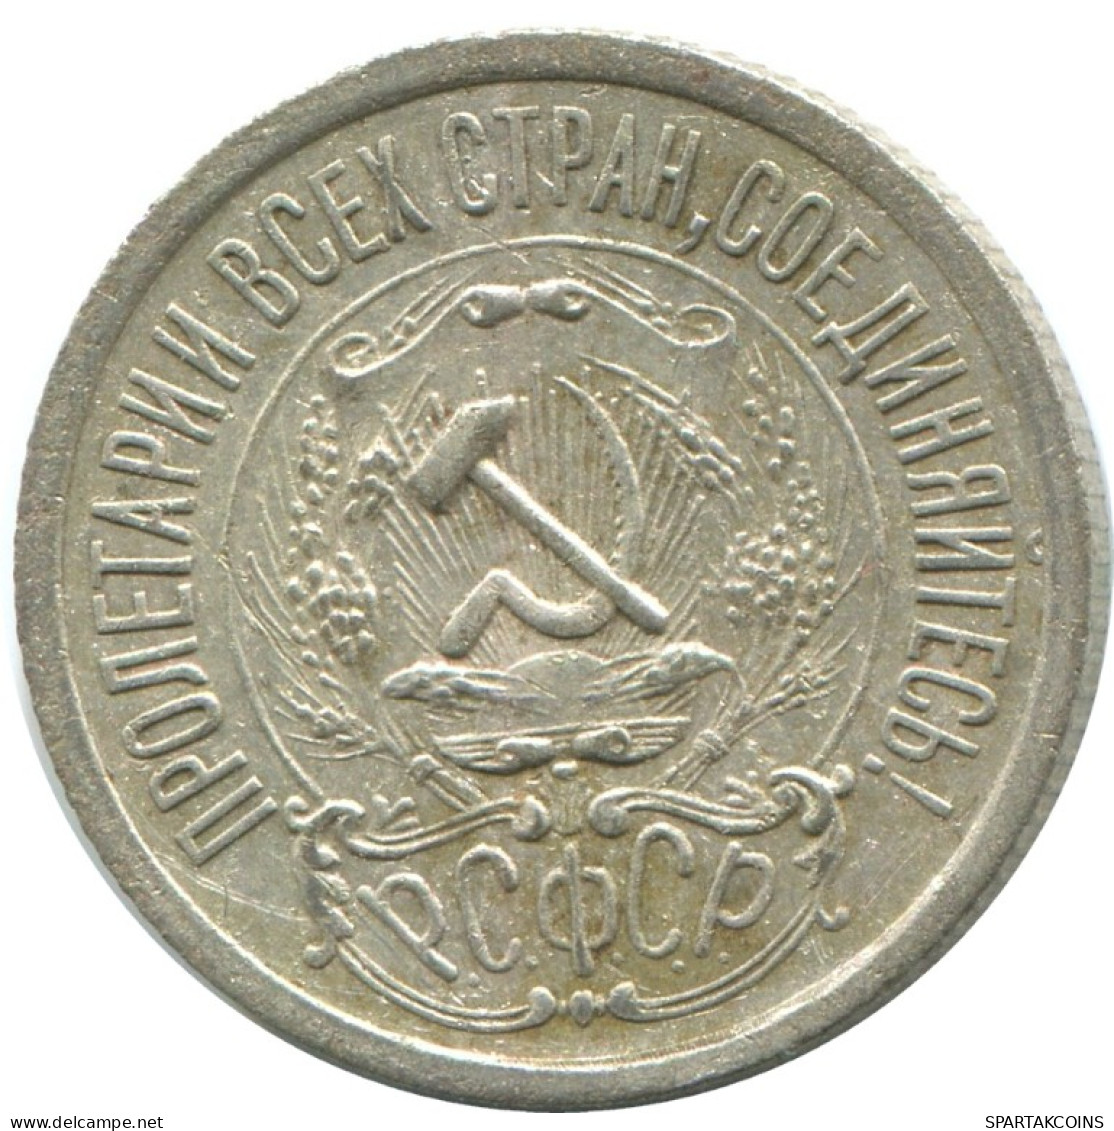 15 KOPEKS 1923 RUSIA RUSSIA RSFSR PLATA Moneda HIGH GRADE #AF105.4.E.A - Russia